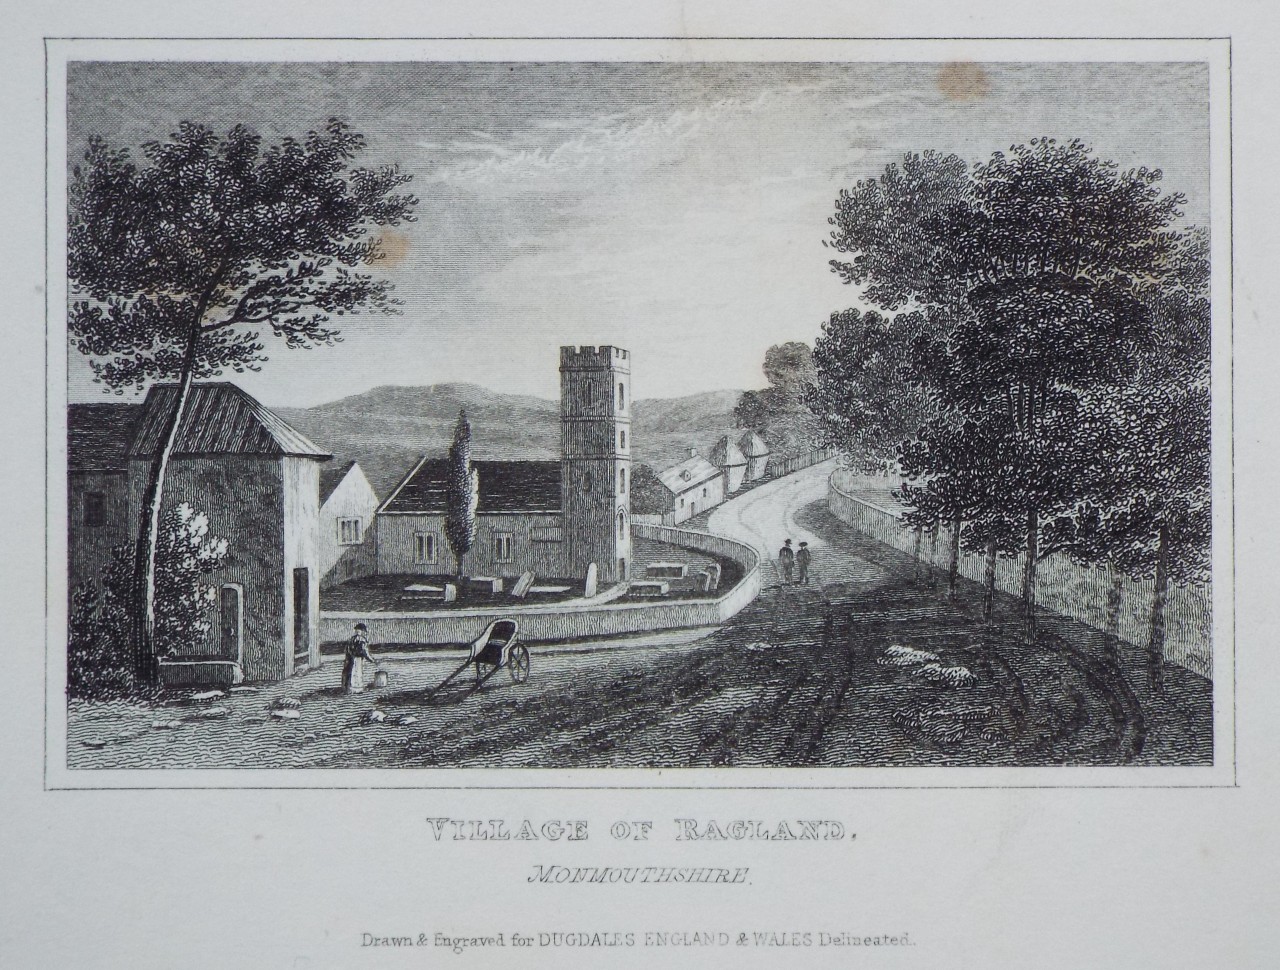 Print - Village of Ragland, Monmouthshire.